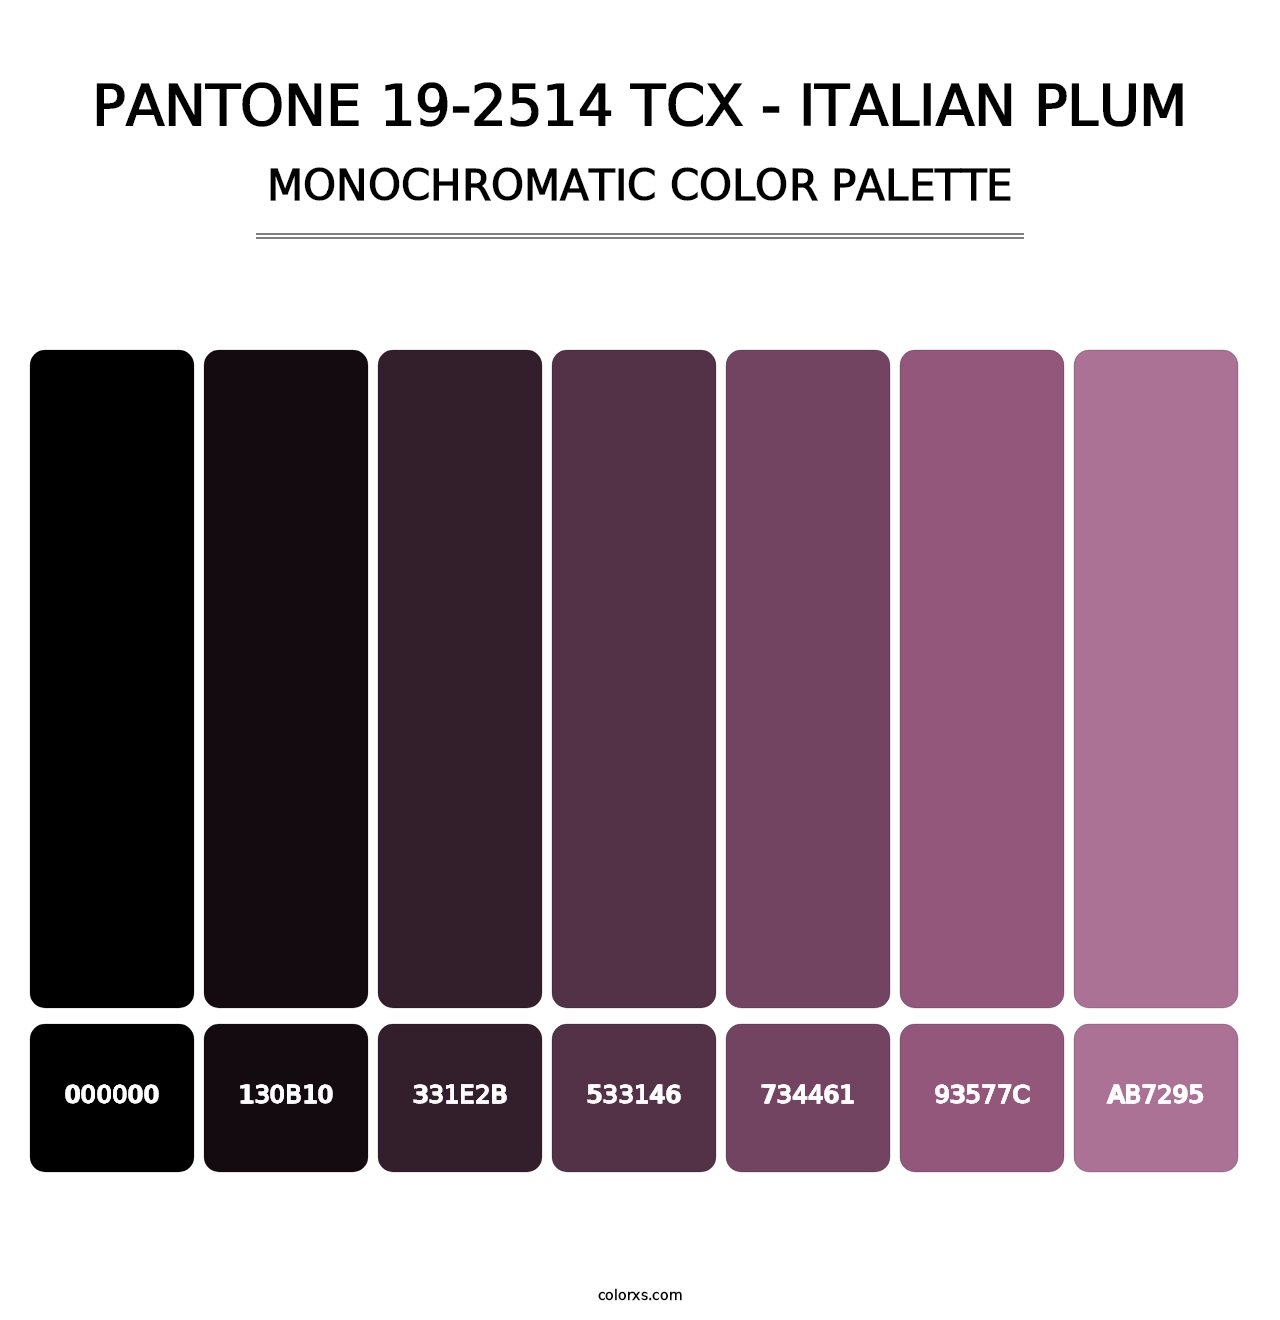 PANTONE 19-2514 TCX - Italian Plum - Monochromatic Color Palette